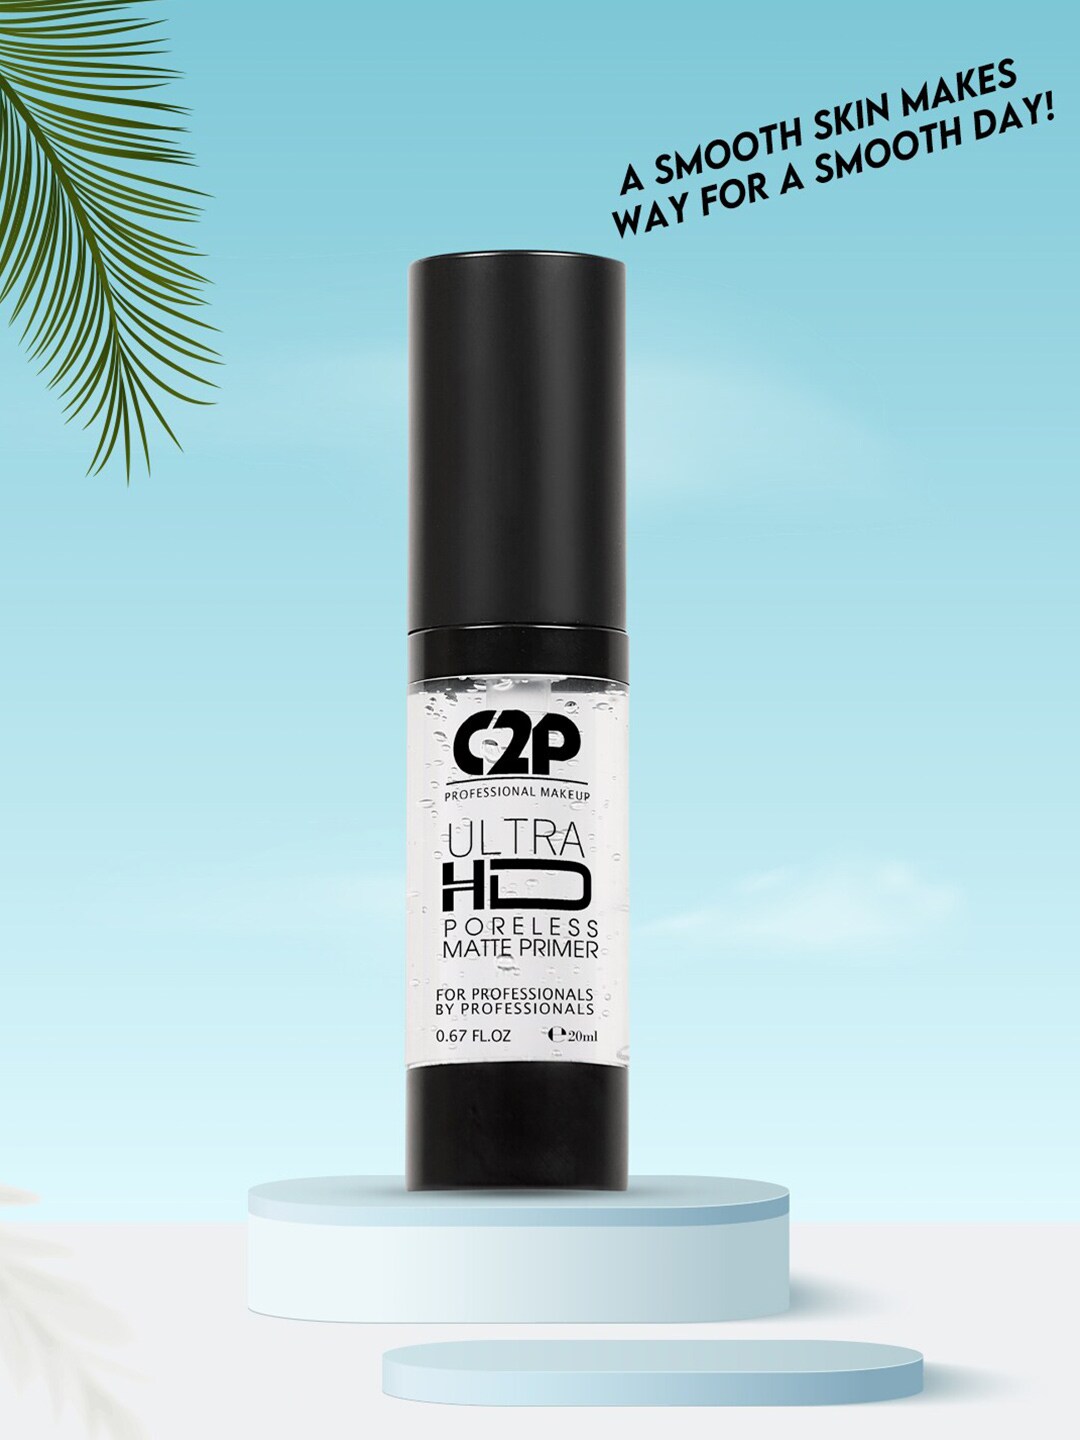 C2P PROFESSIONAL MAKEUP Ultra HD Poreless Matte Primer 20 ml Price in India